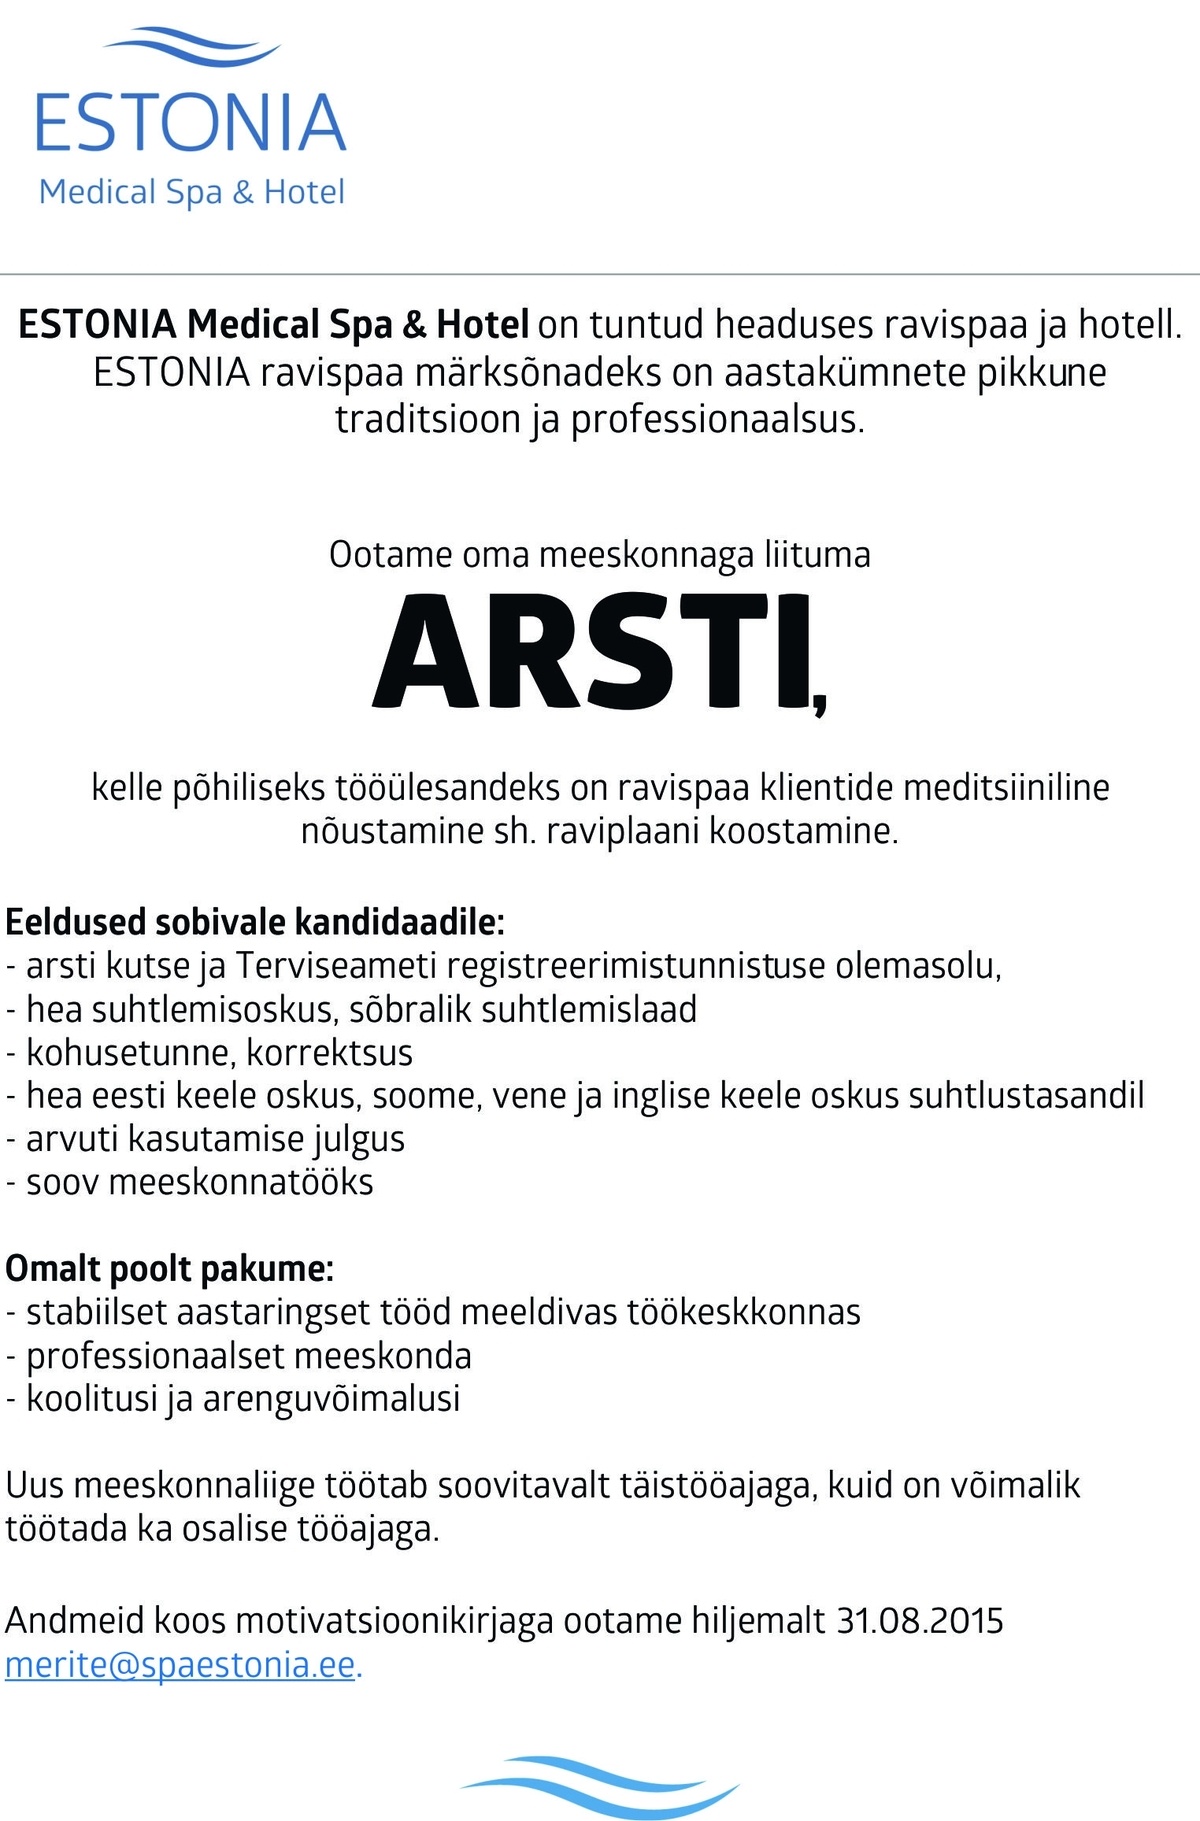 Estonia Spa Hotels AS Arst